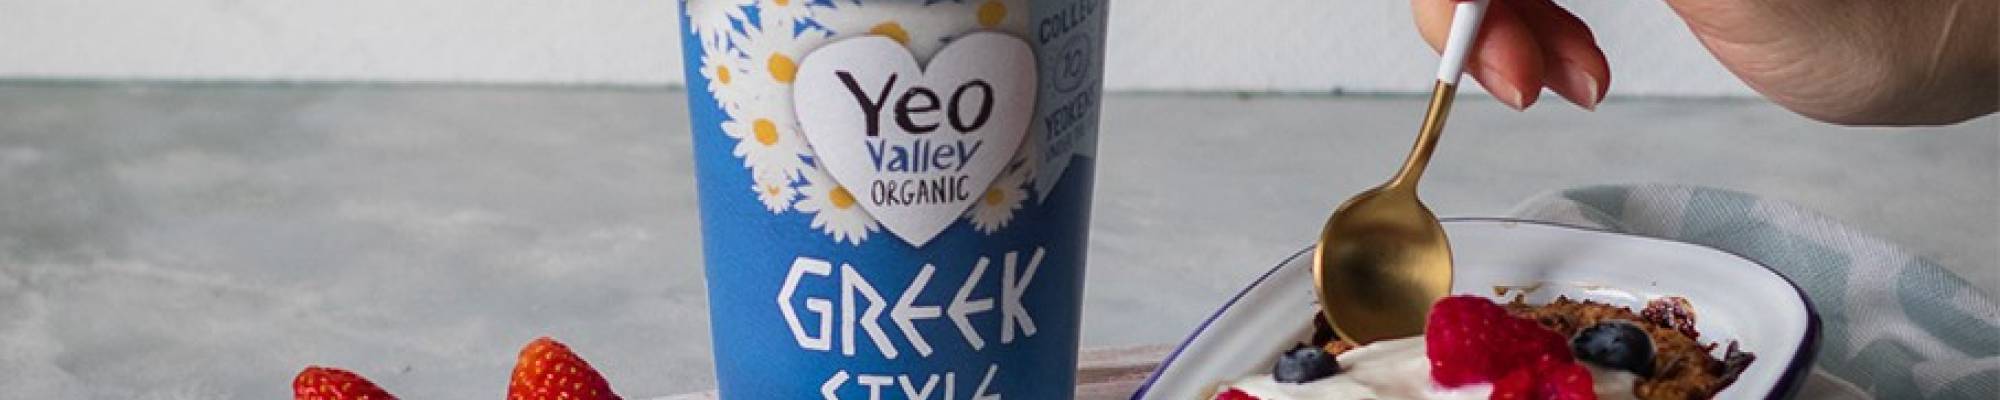 Yeo Valley Organic Greek Style Yogurt